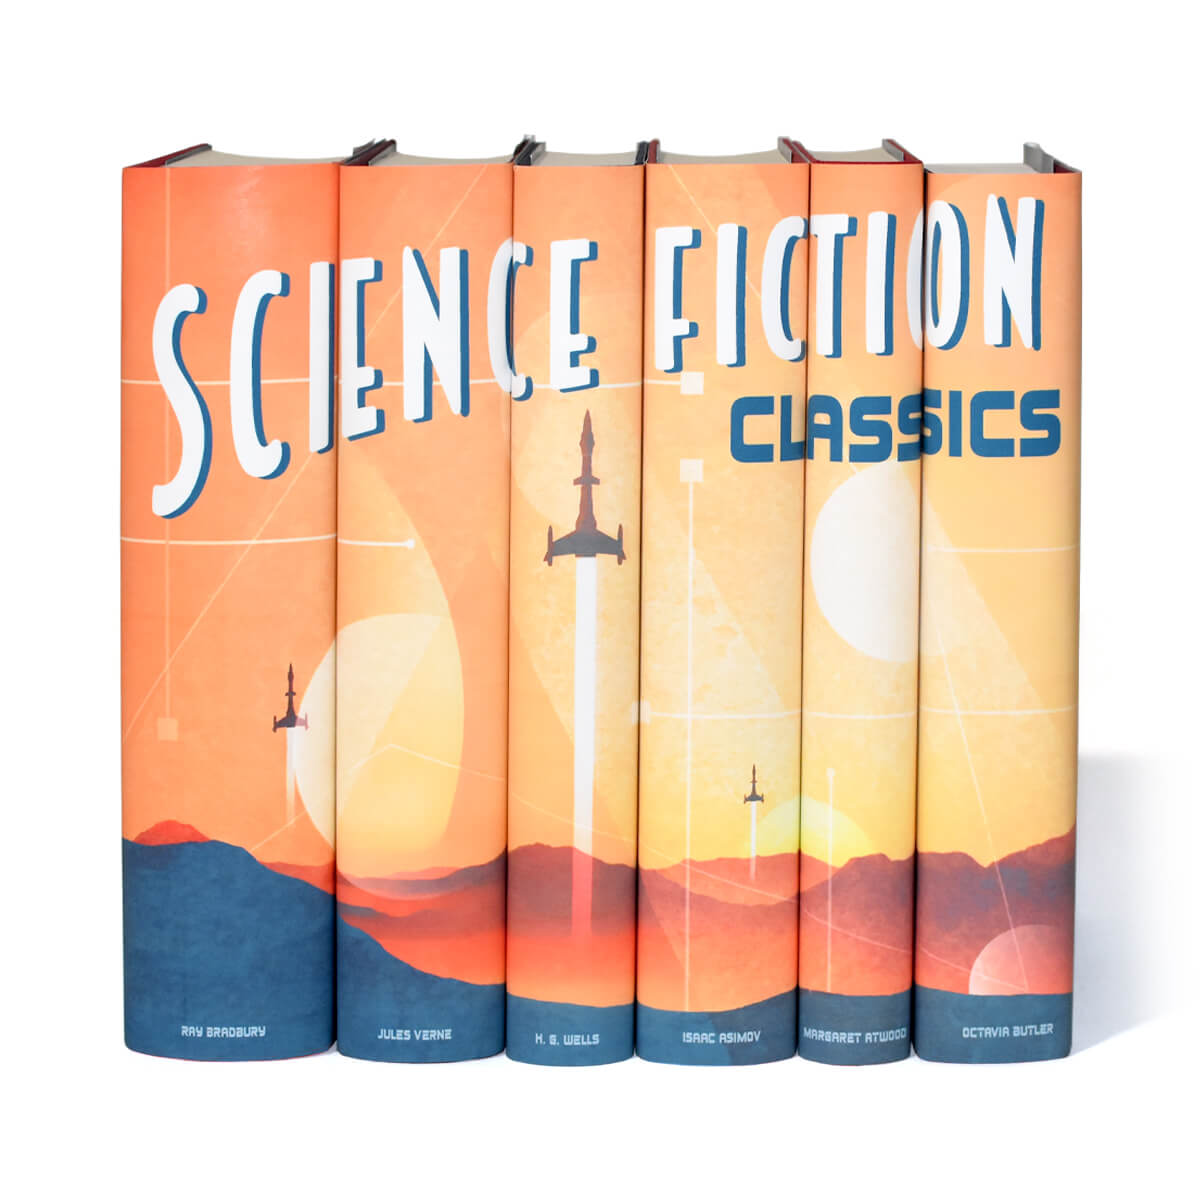 Customized Science Fiction Classics Set